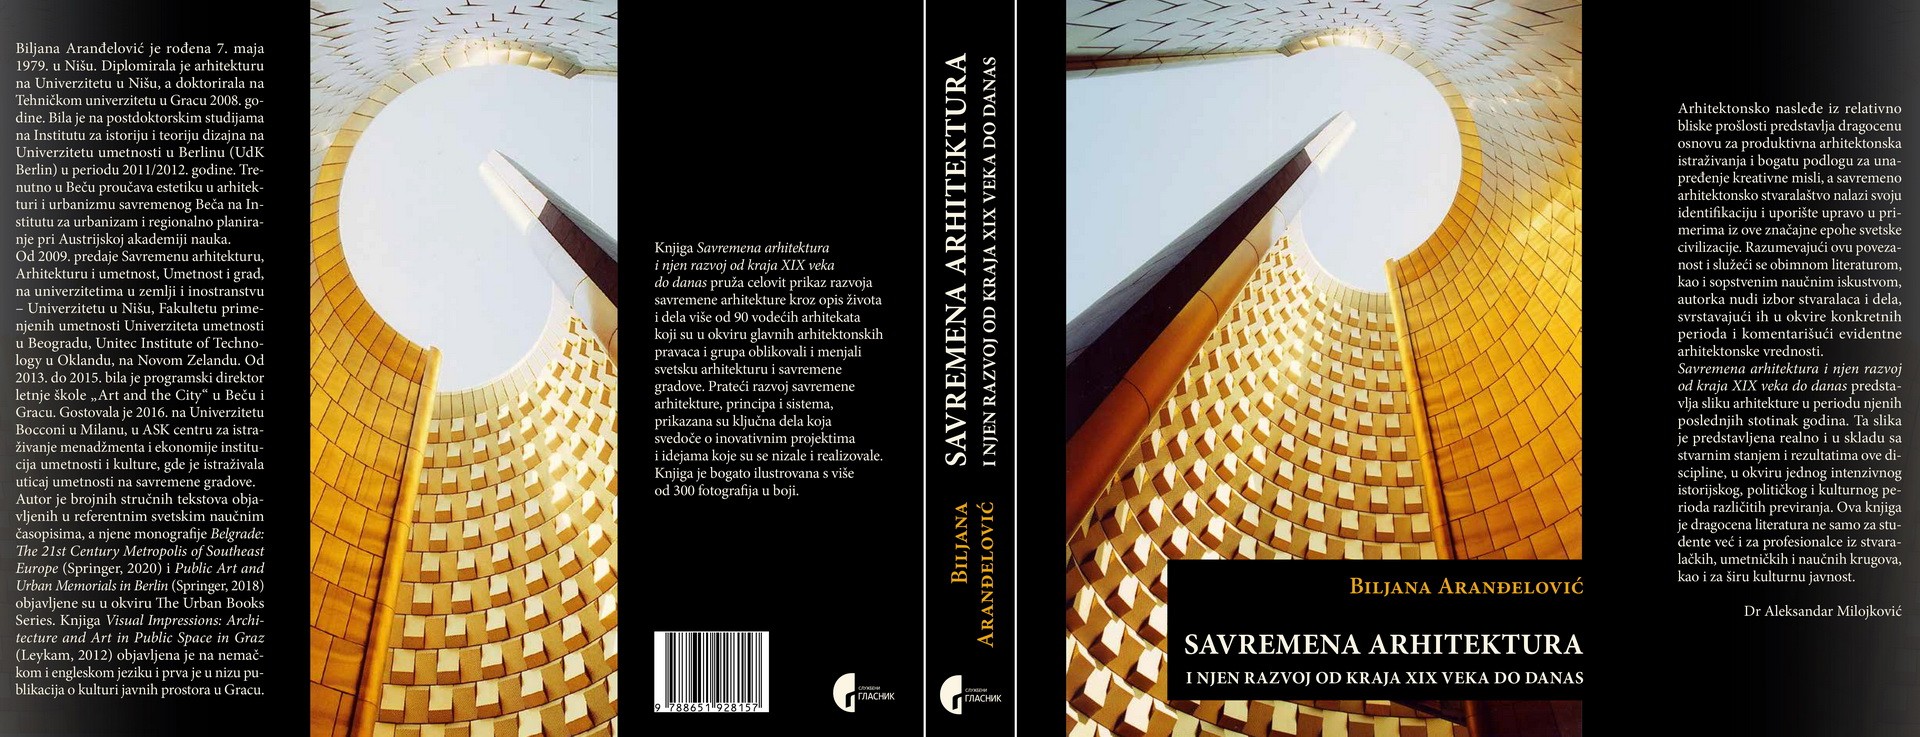 04. savremena arhitektura cover